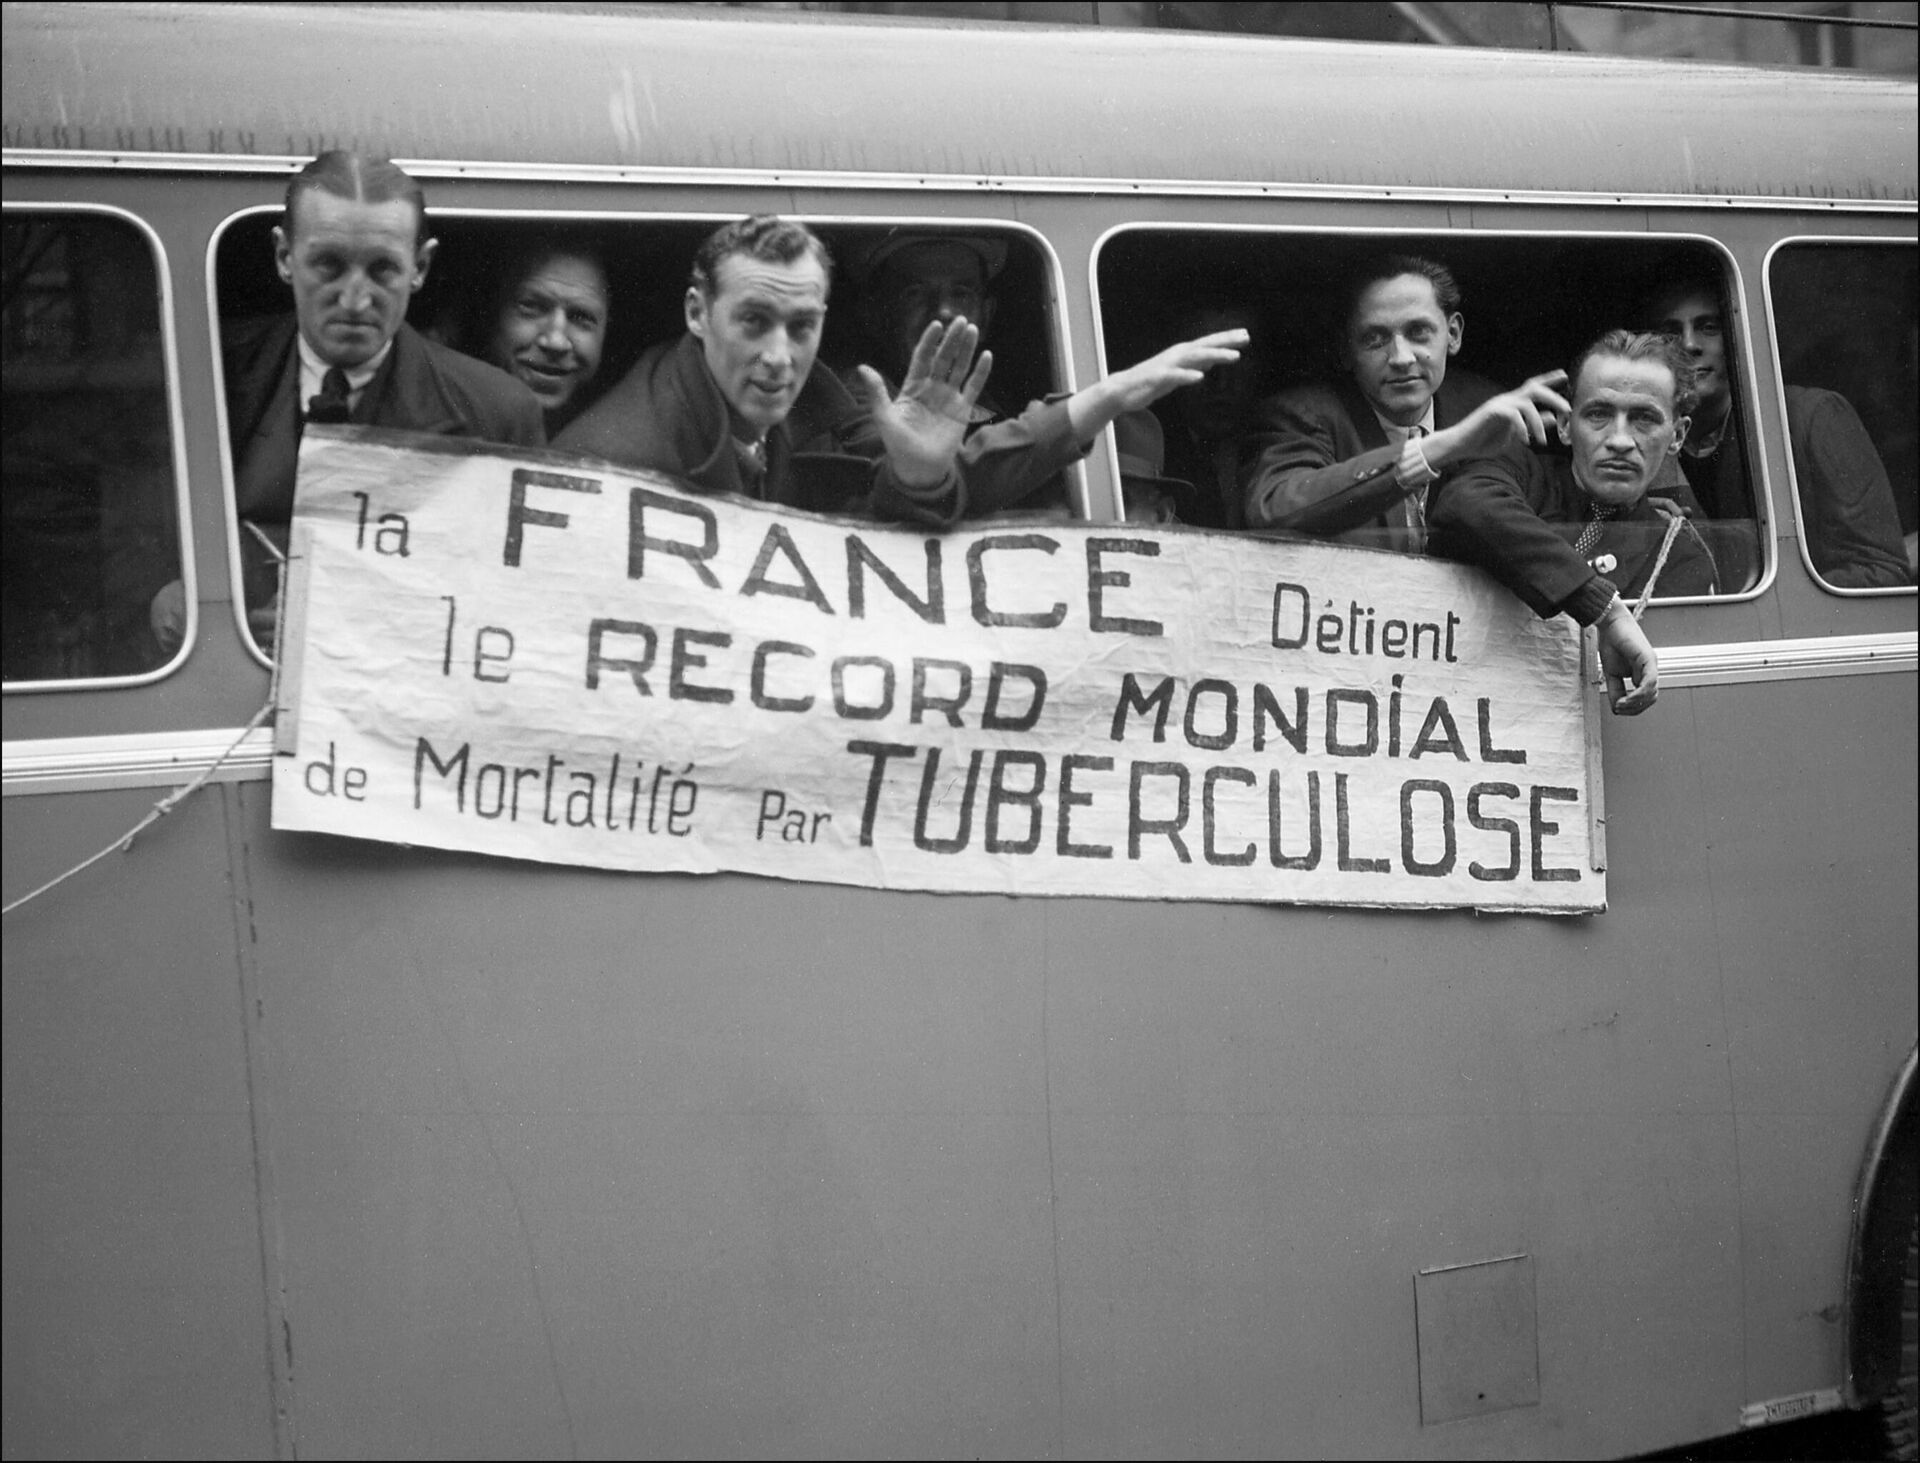 Infectados de tuberculosis en Francia  - Sputnik Mundo, 1920, 05.08.2021